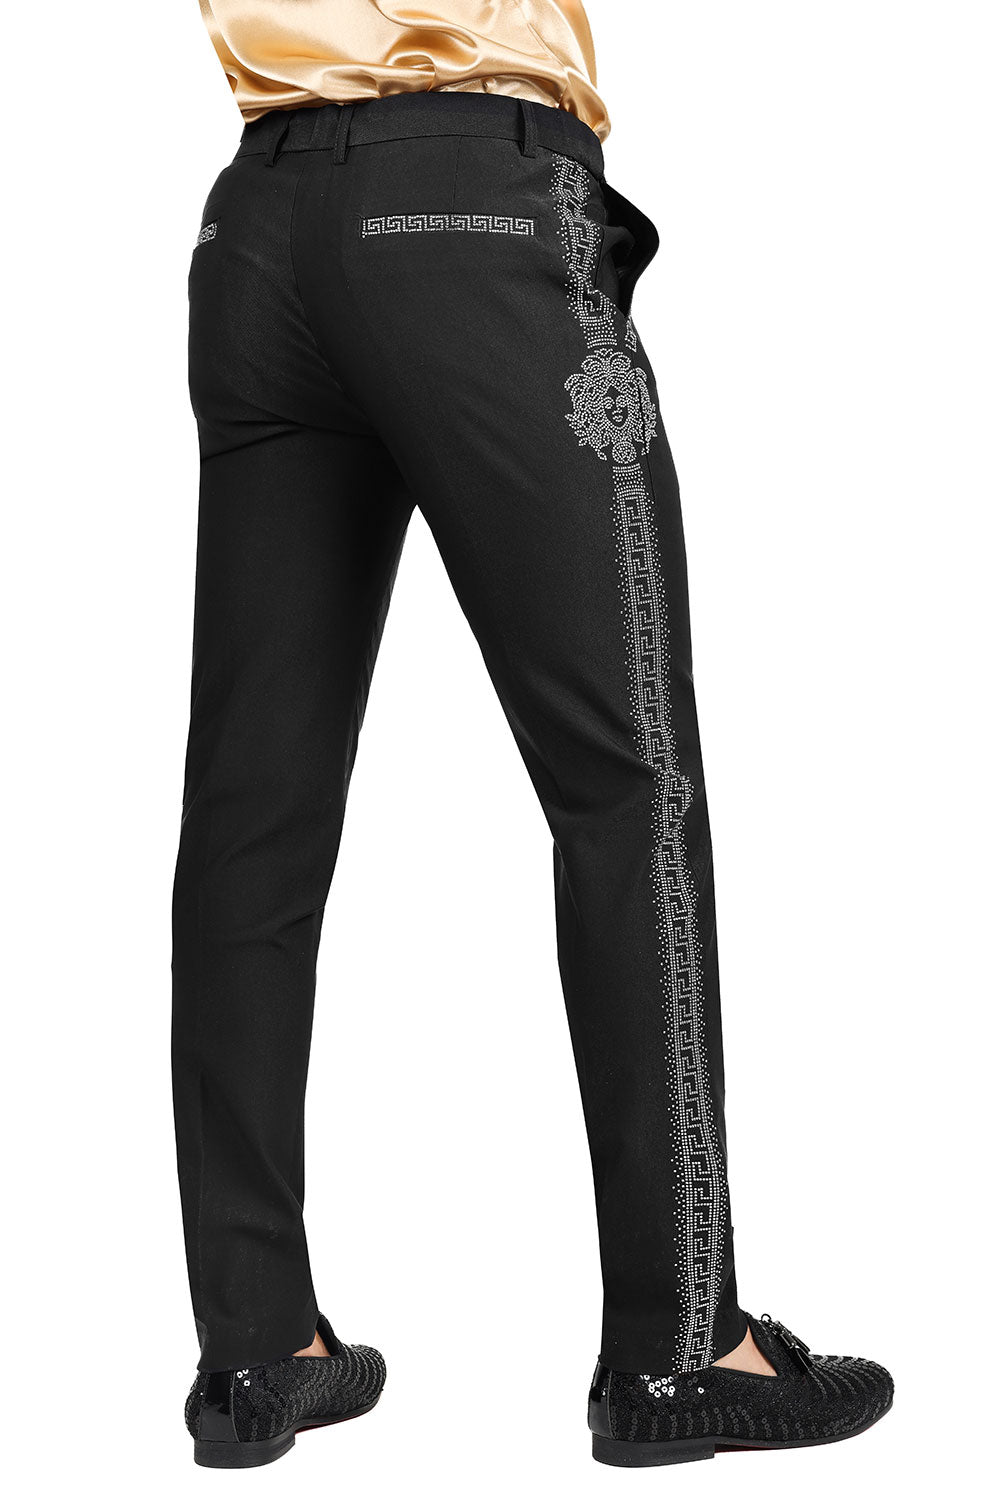 Barabas Men's Medusa Greek Key Pattern Rhinestone Dress Pants 2CPR12 Black and Silver